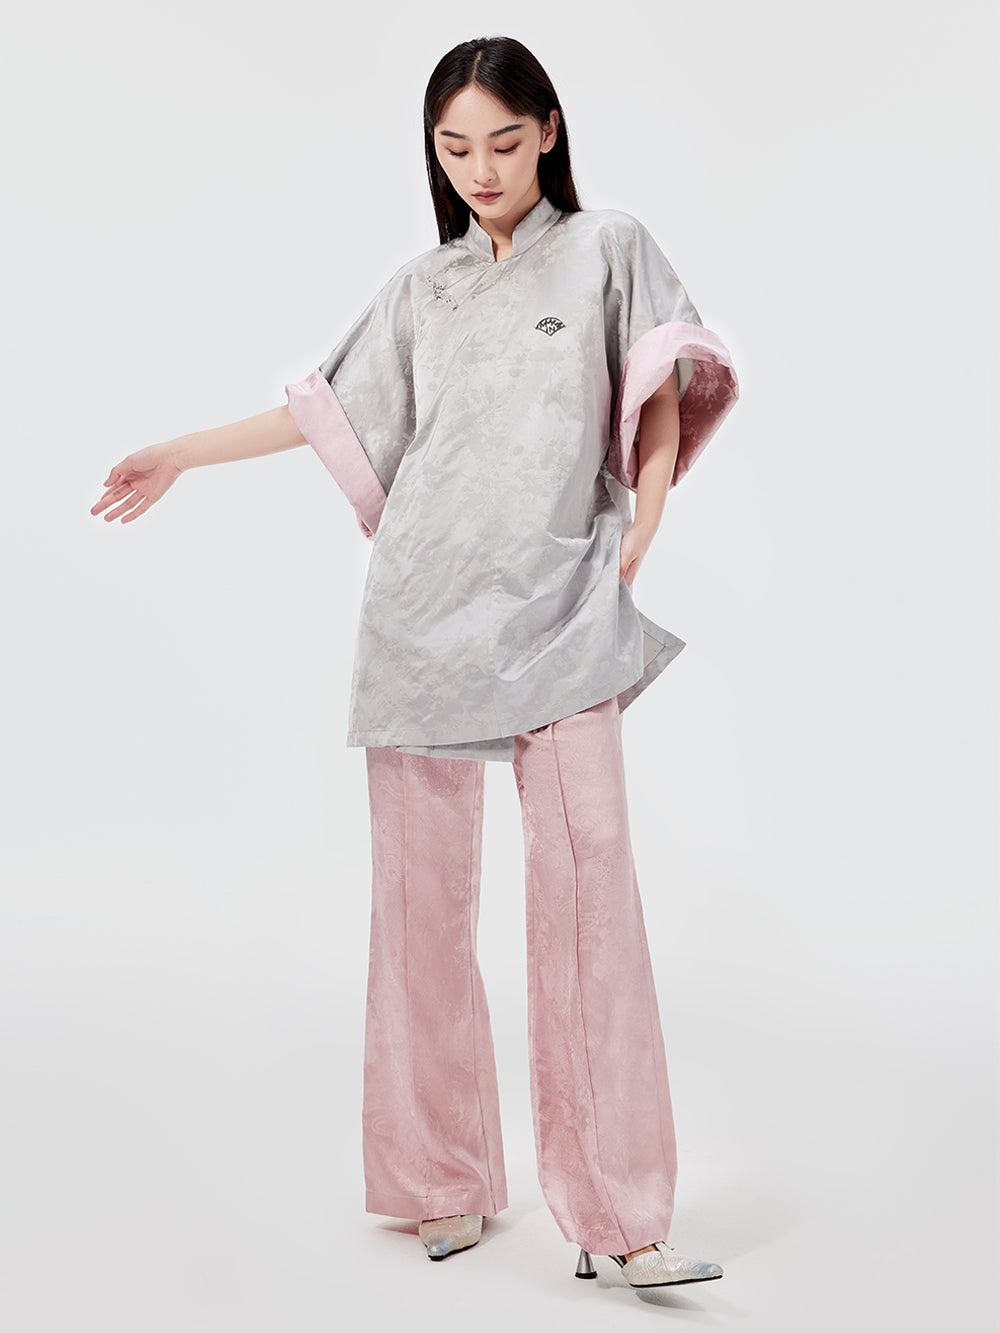 MUKZIN Fashionable Jacquard Cheongsam Shirt